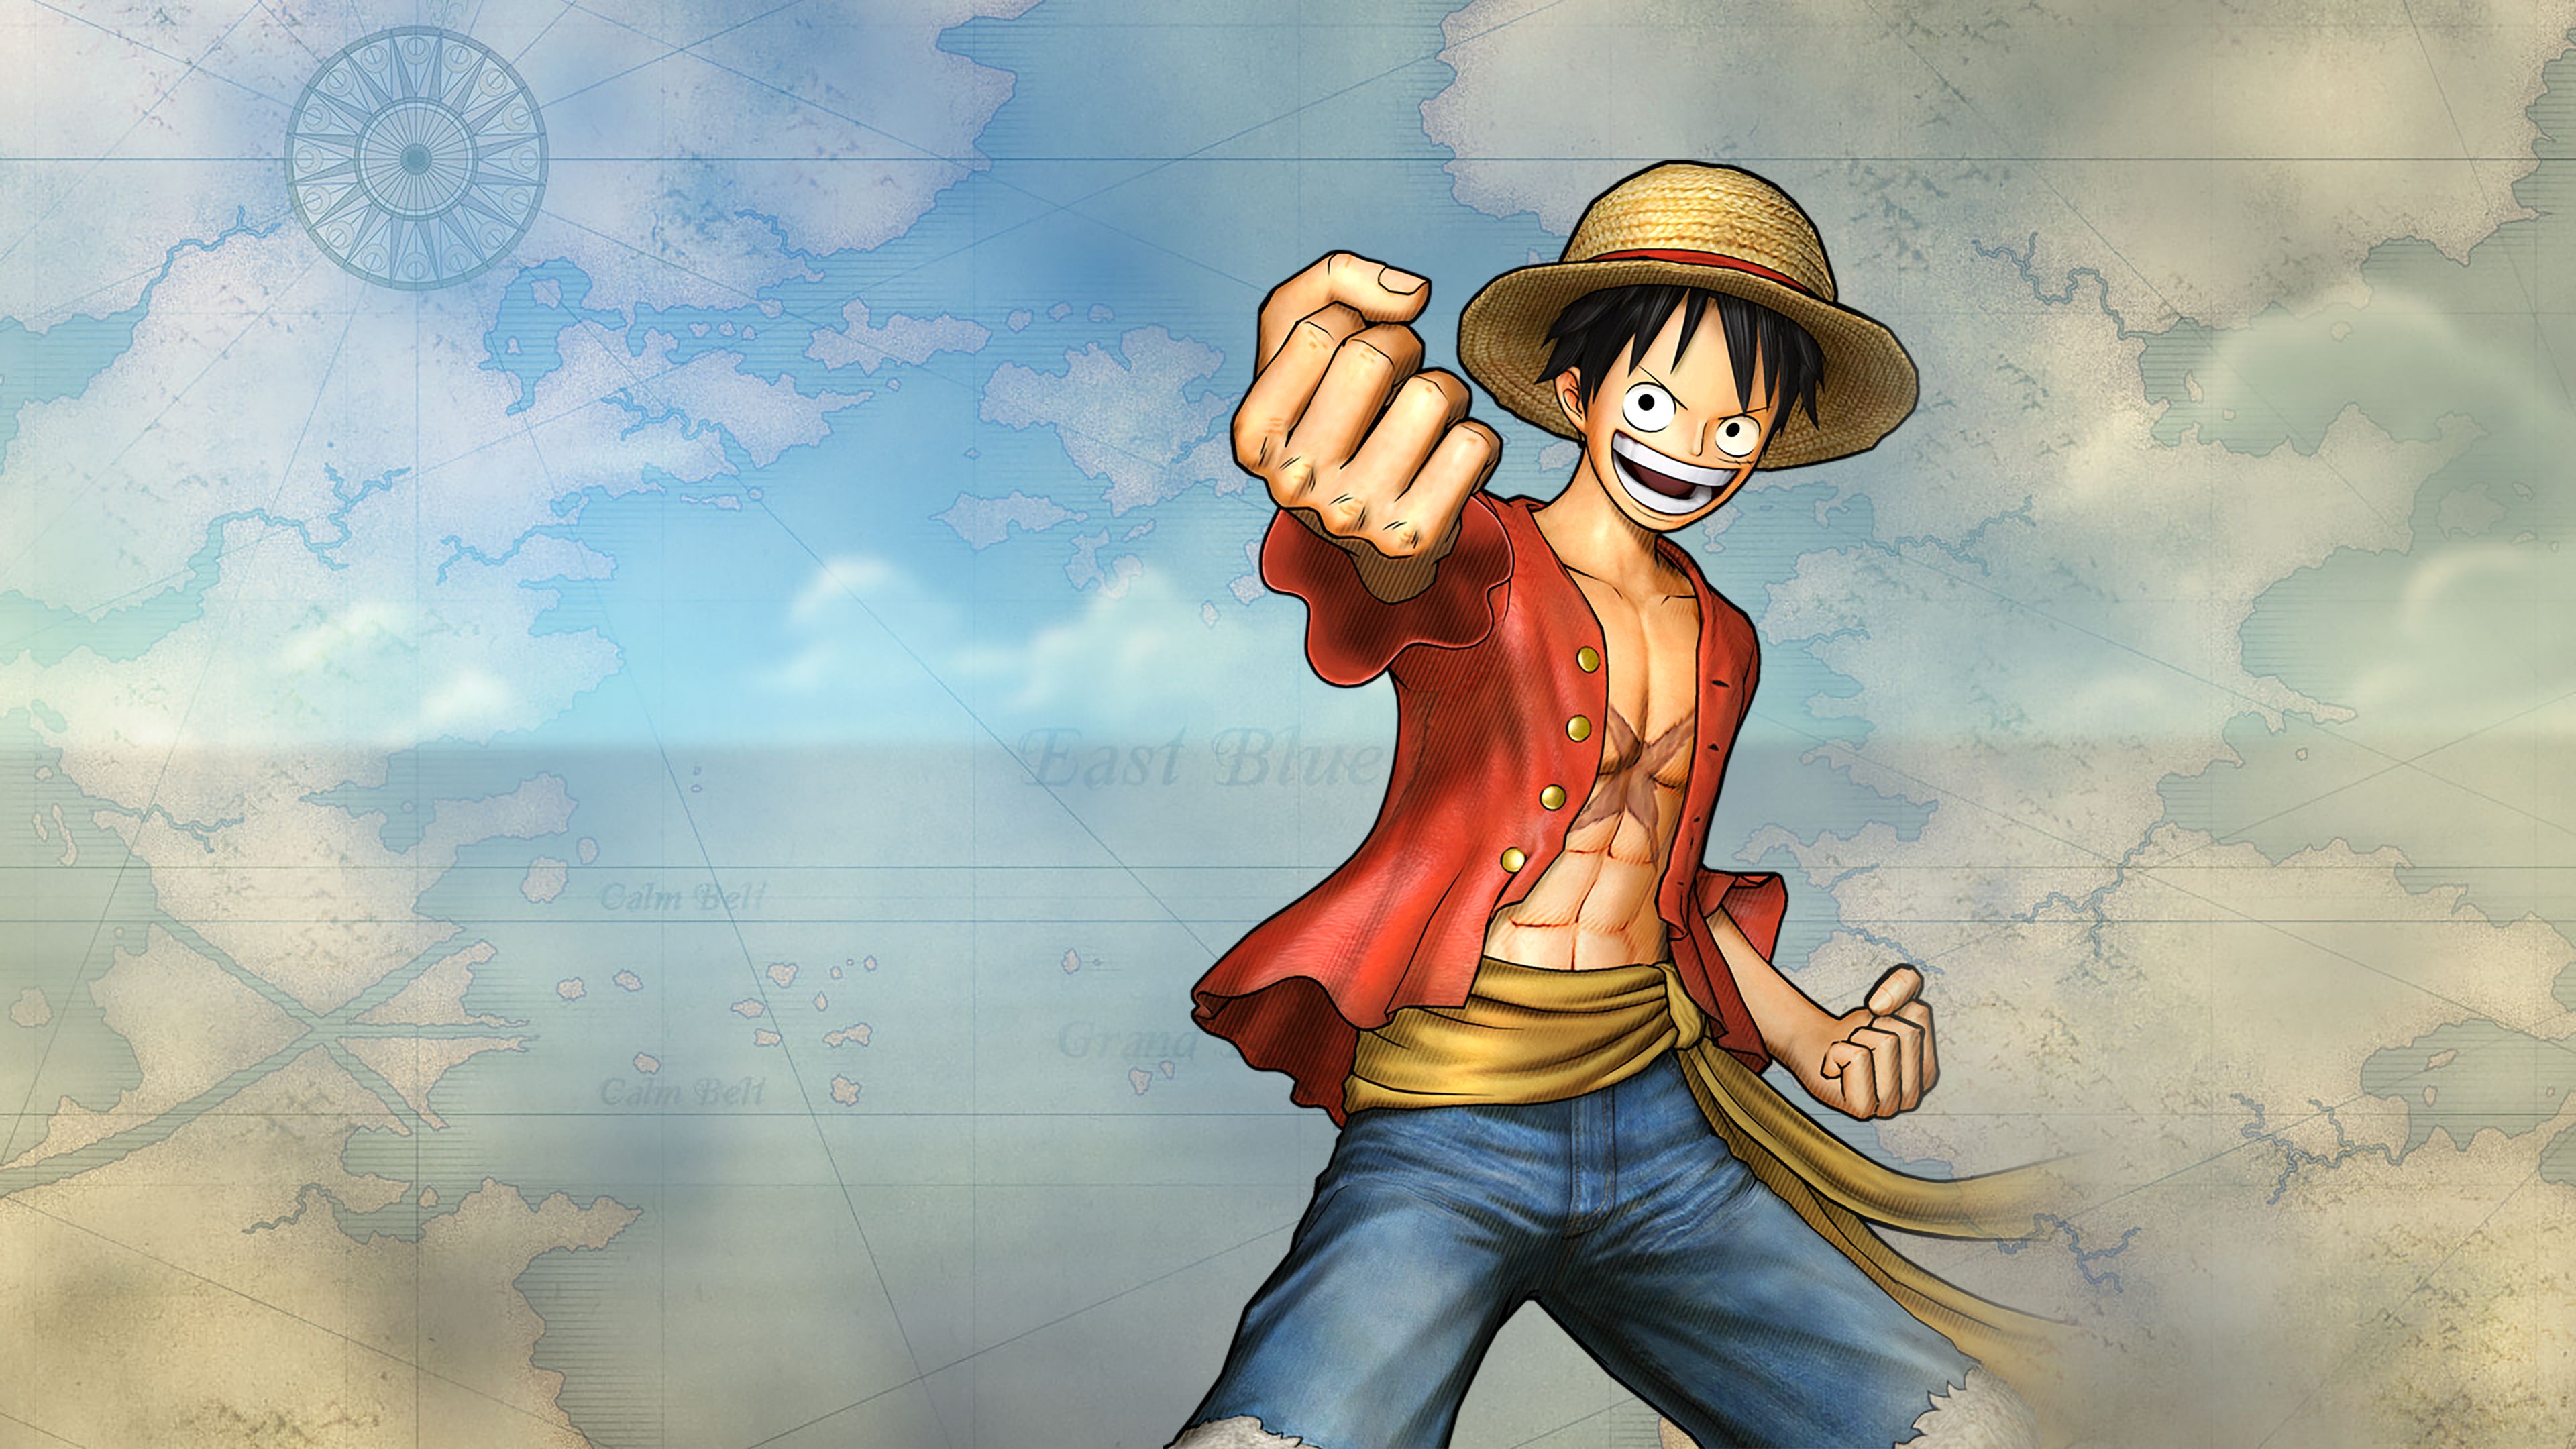 One Piece: Pirate Warriors 3 (日文版)